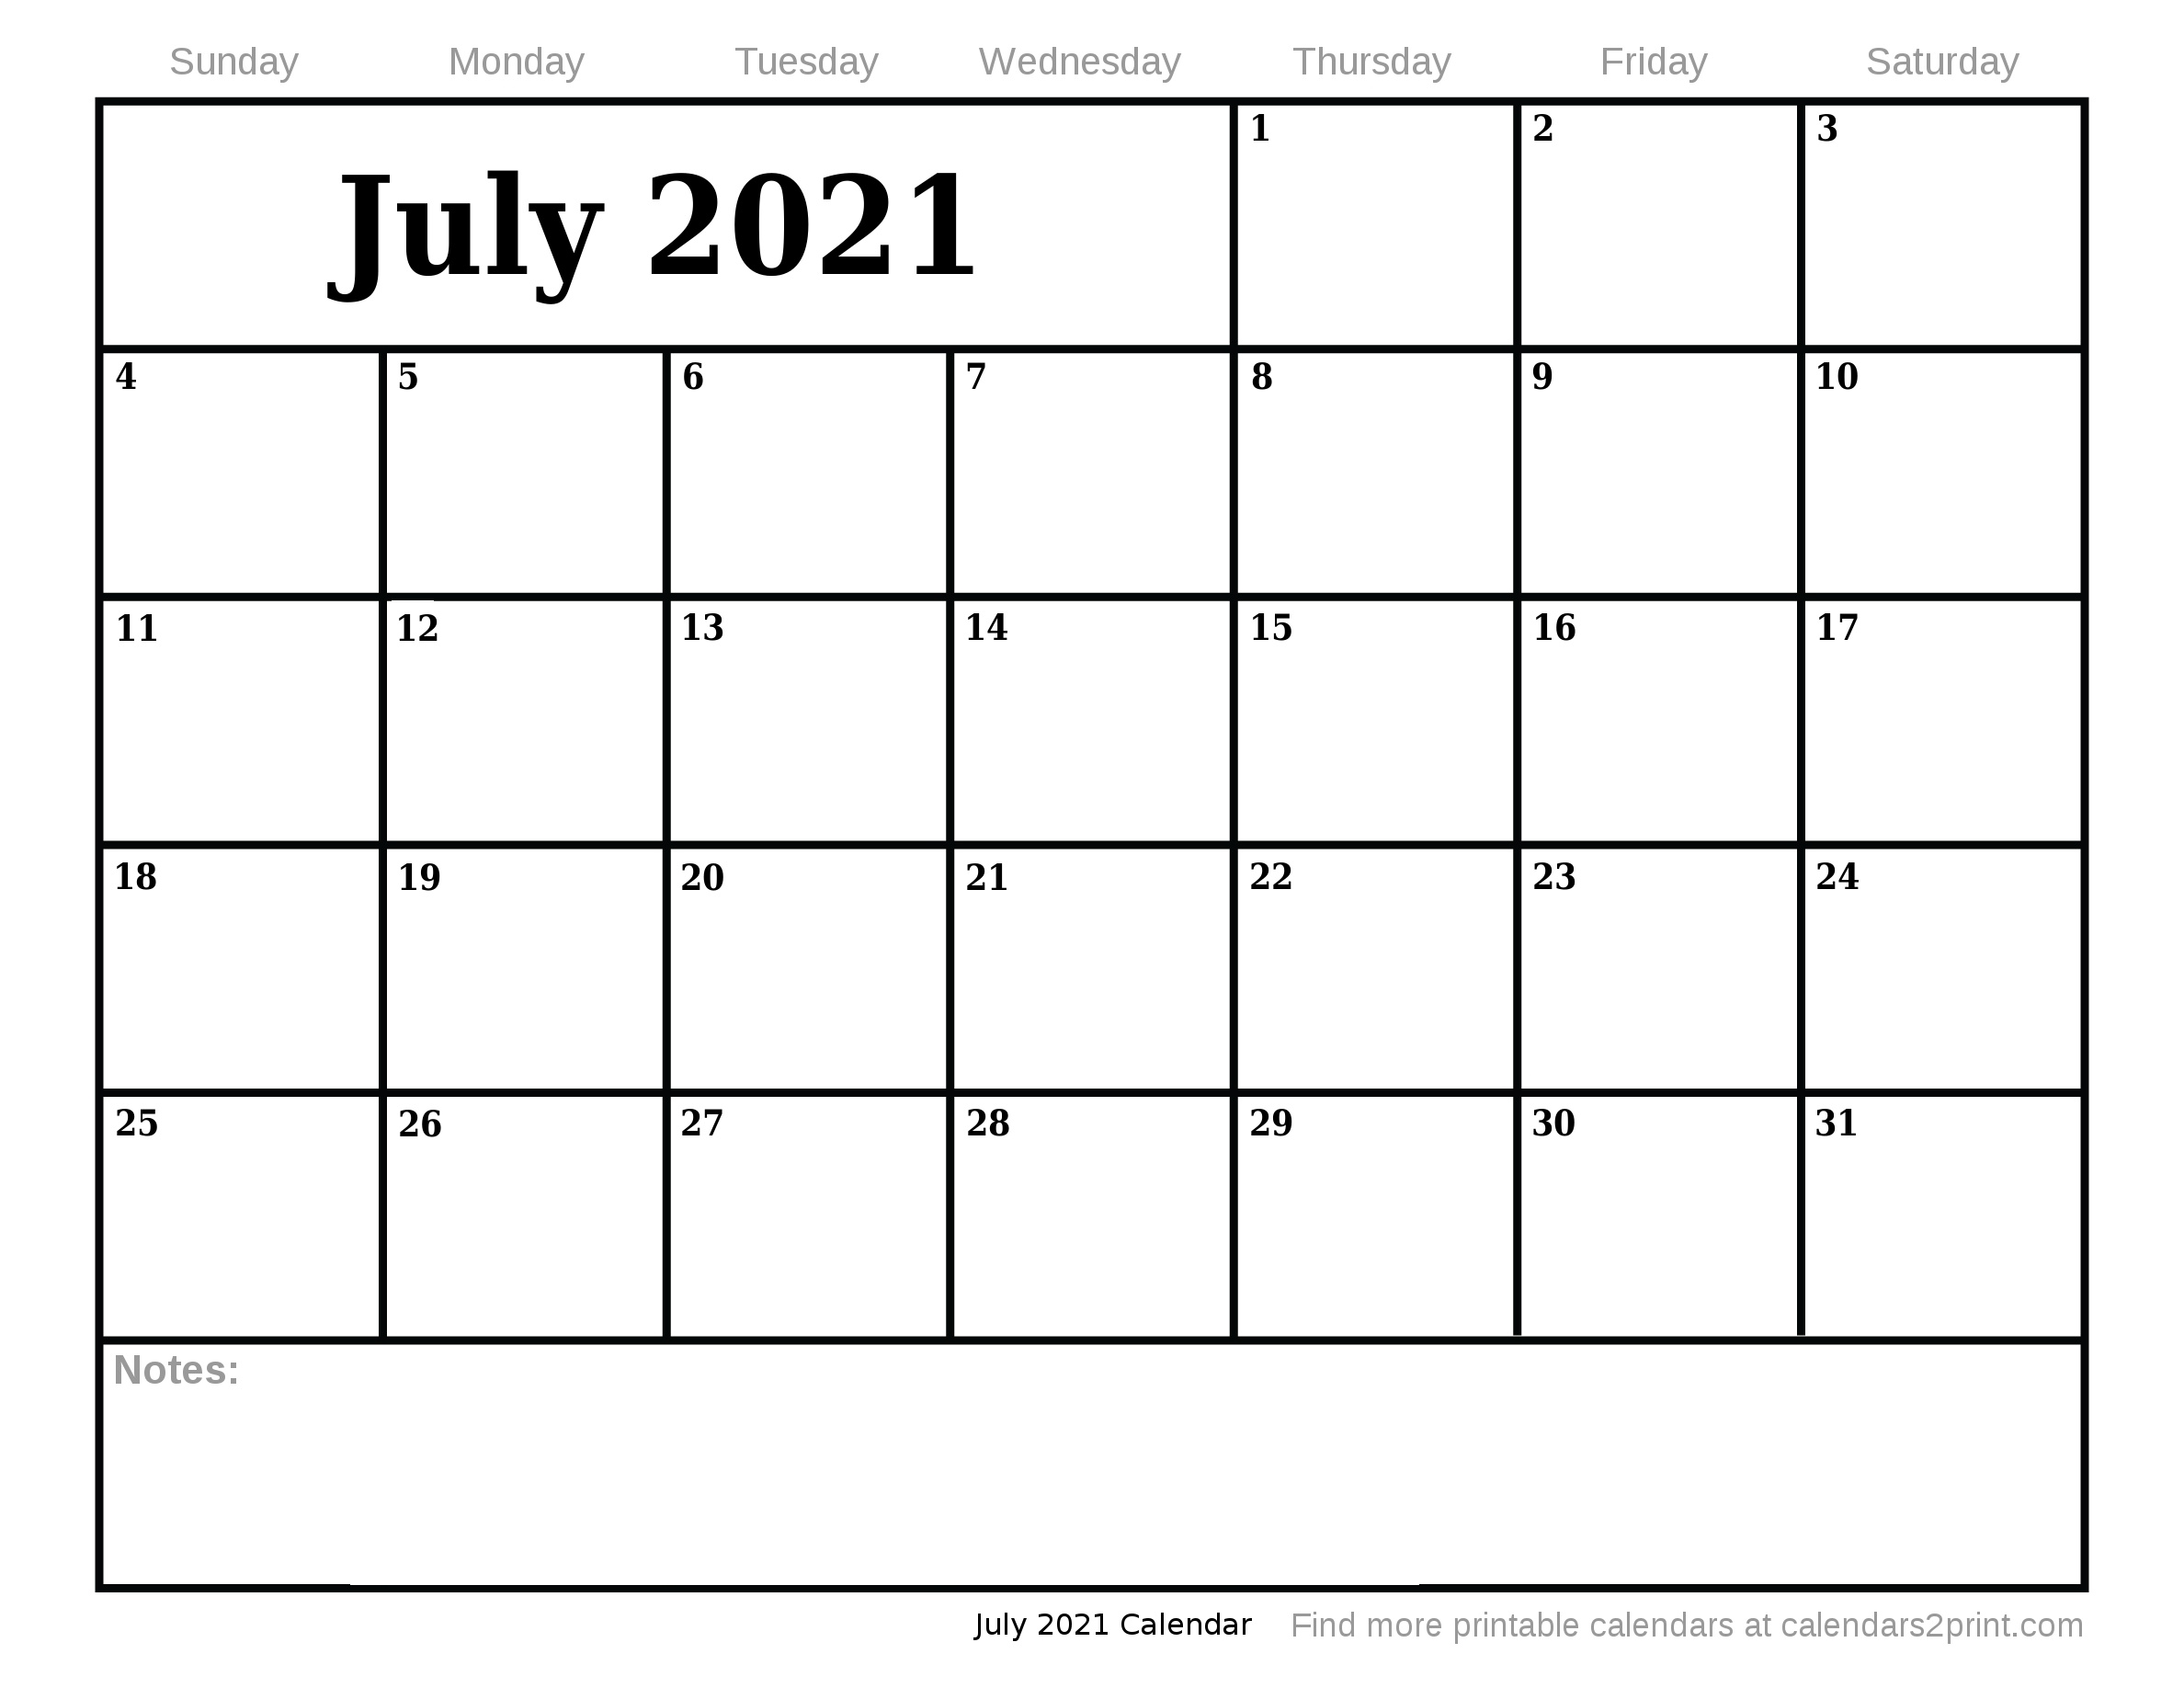 Jul 2021 Printable Calendar